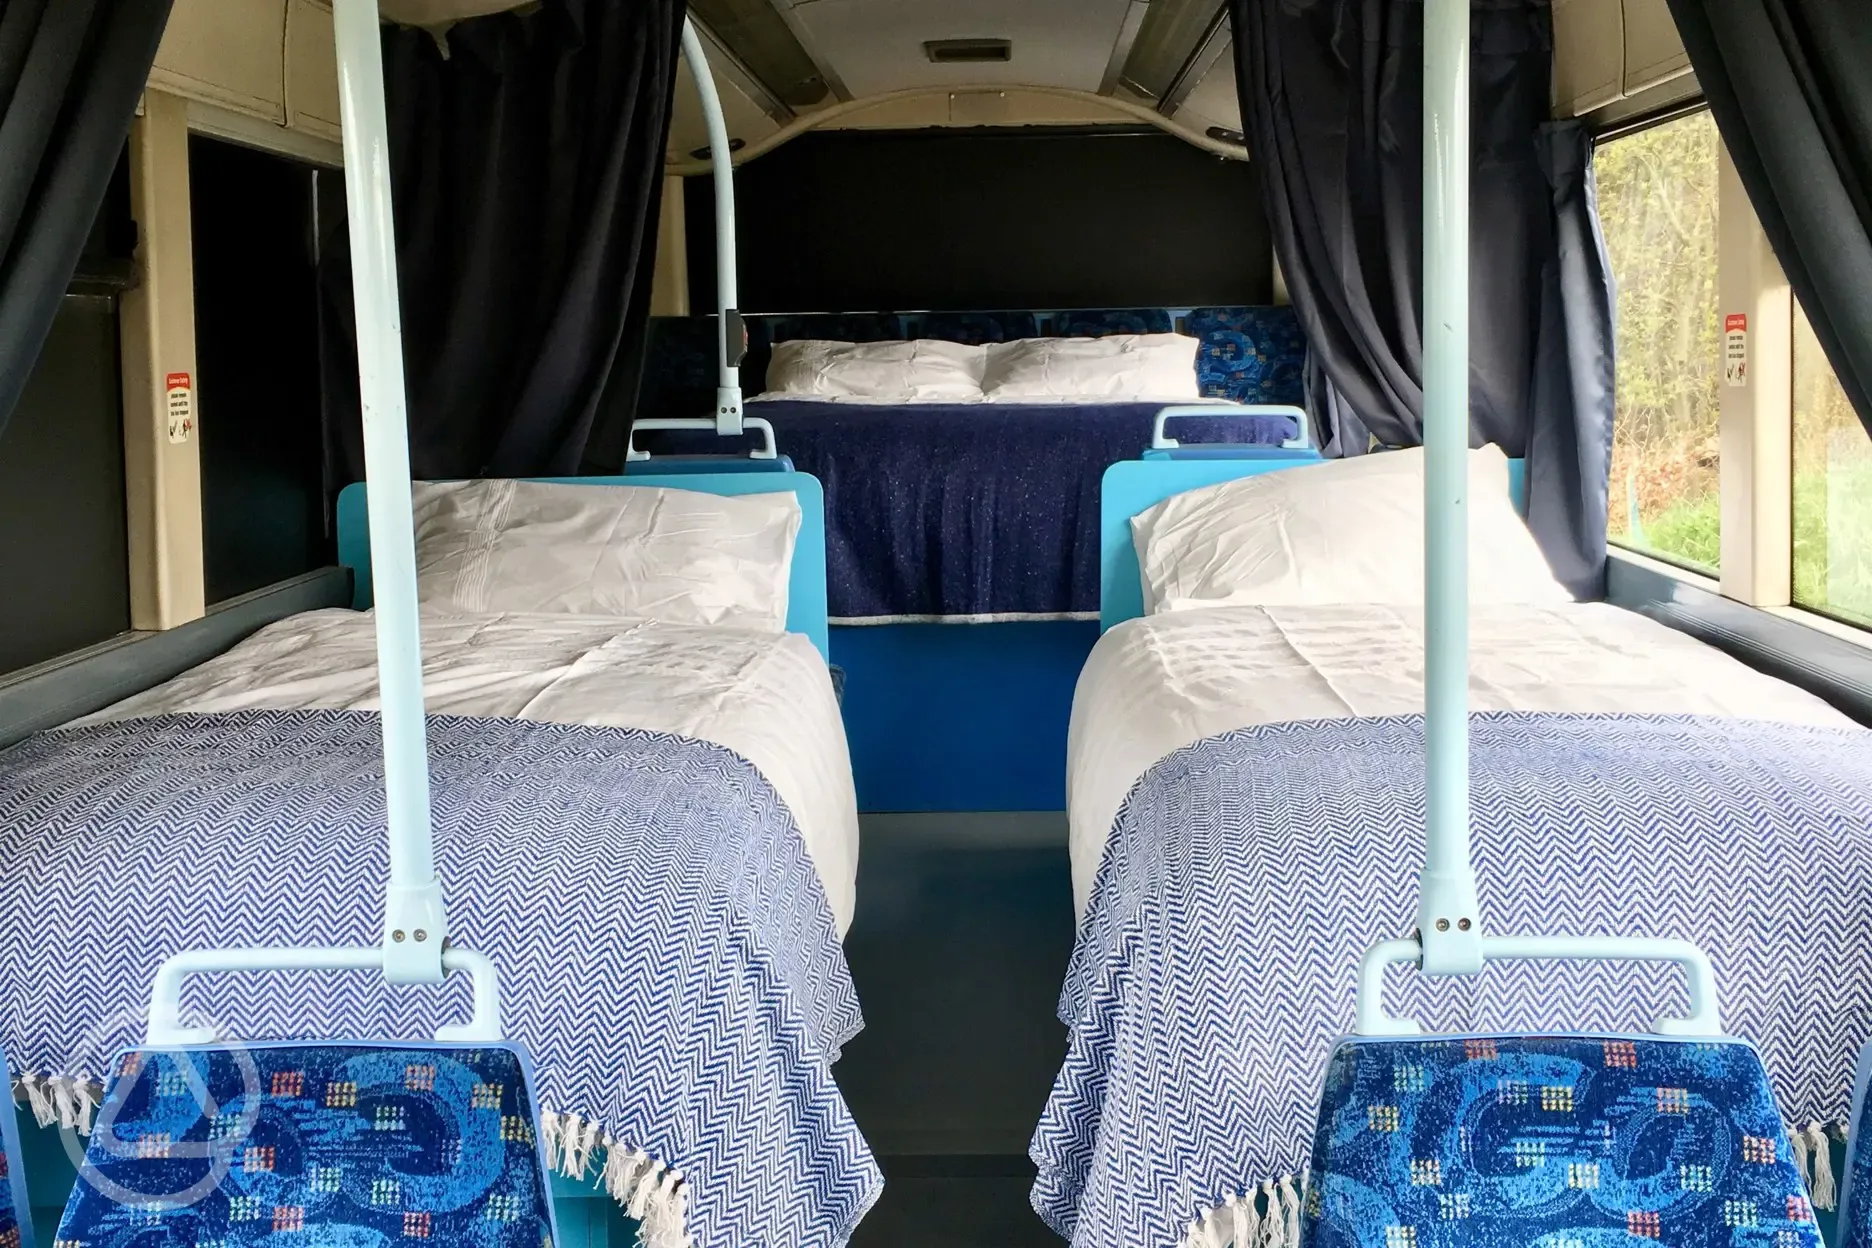 Eco bus - four person interior